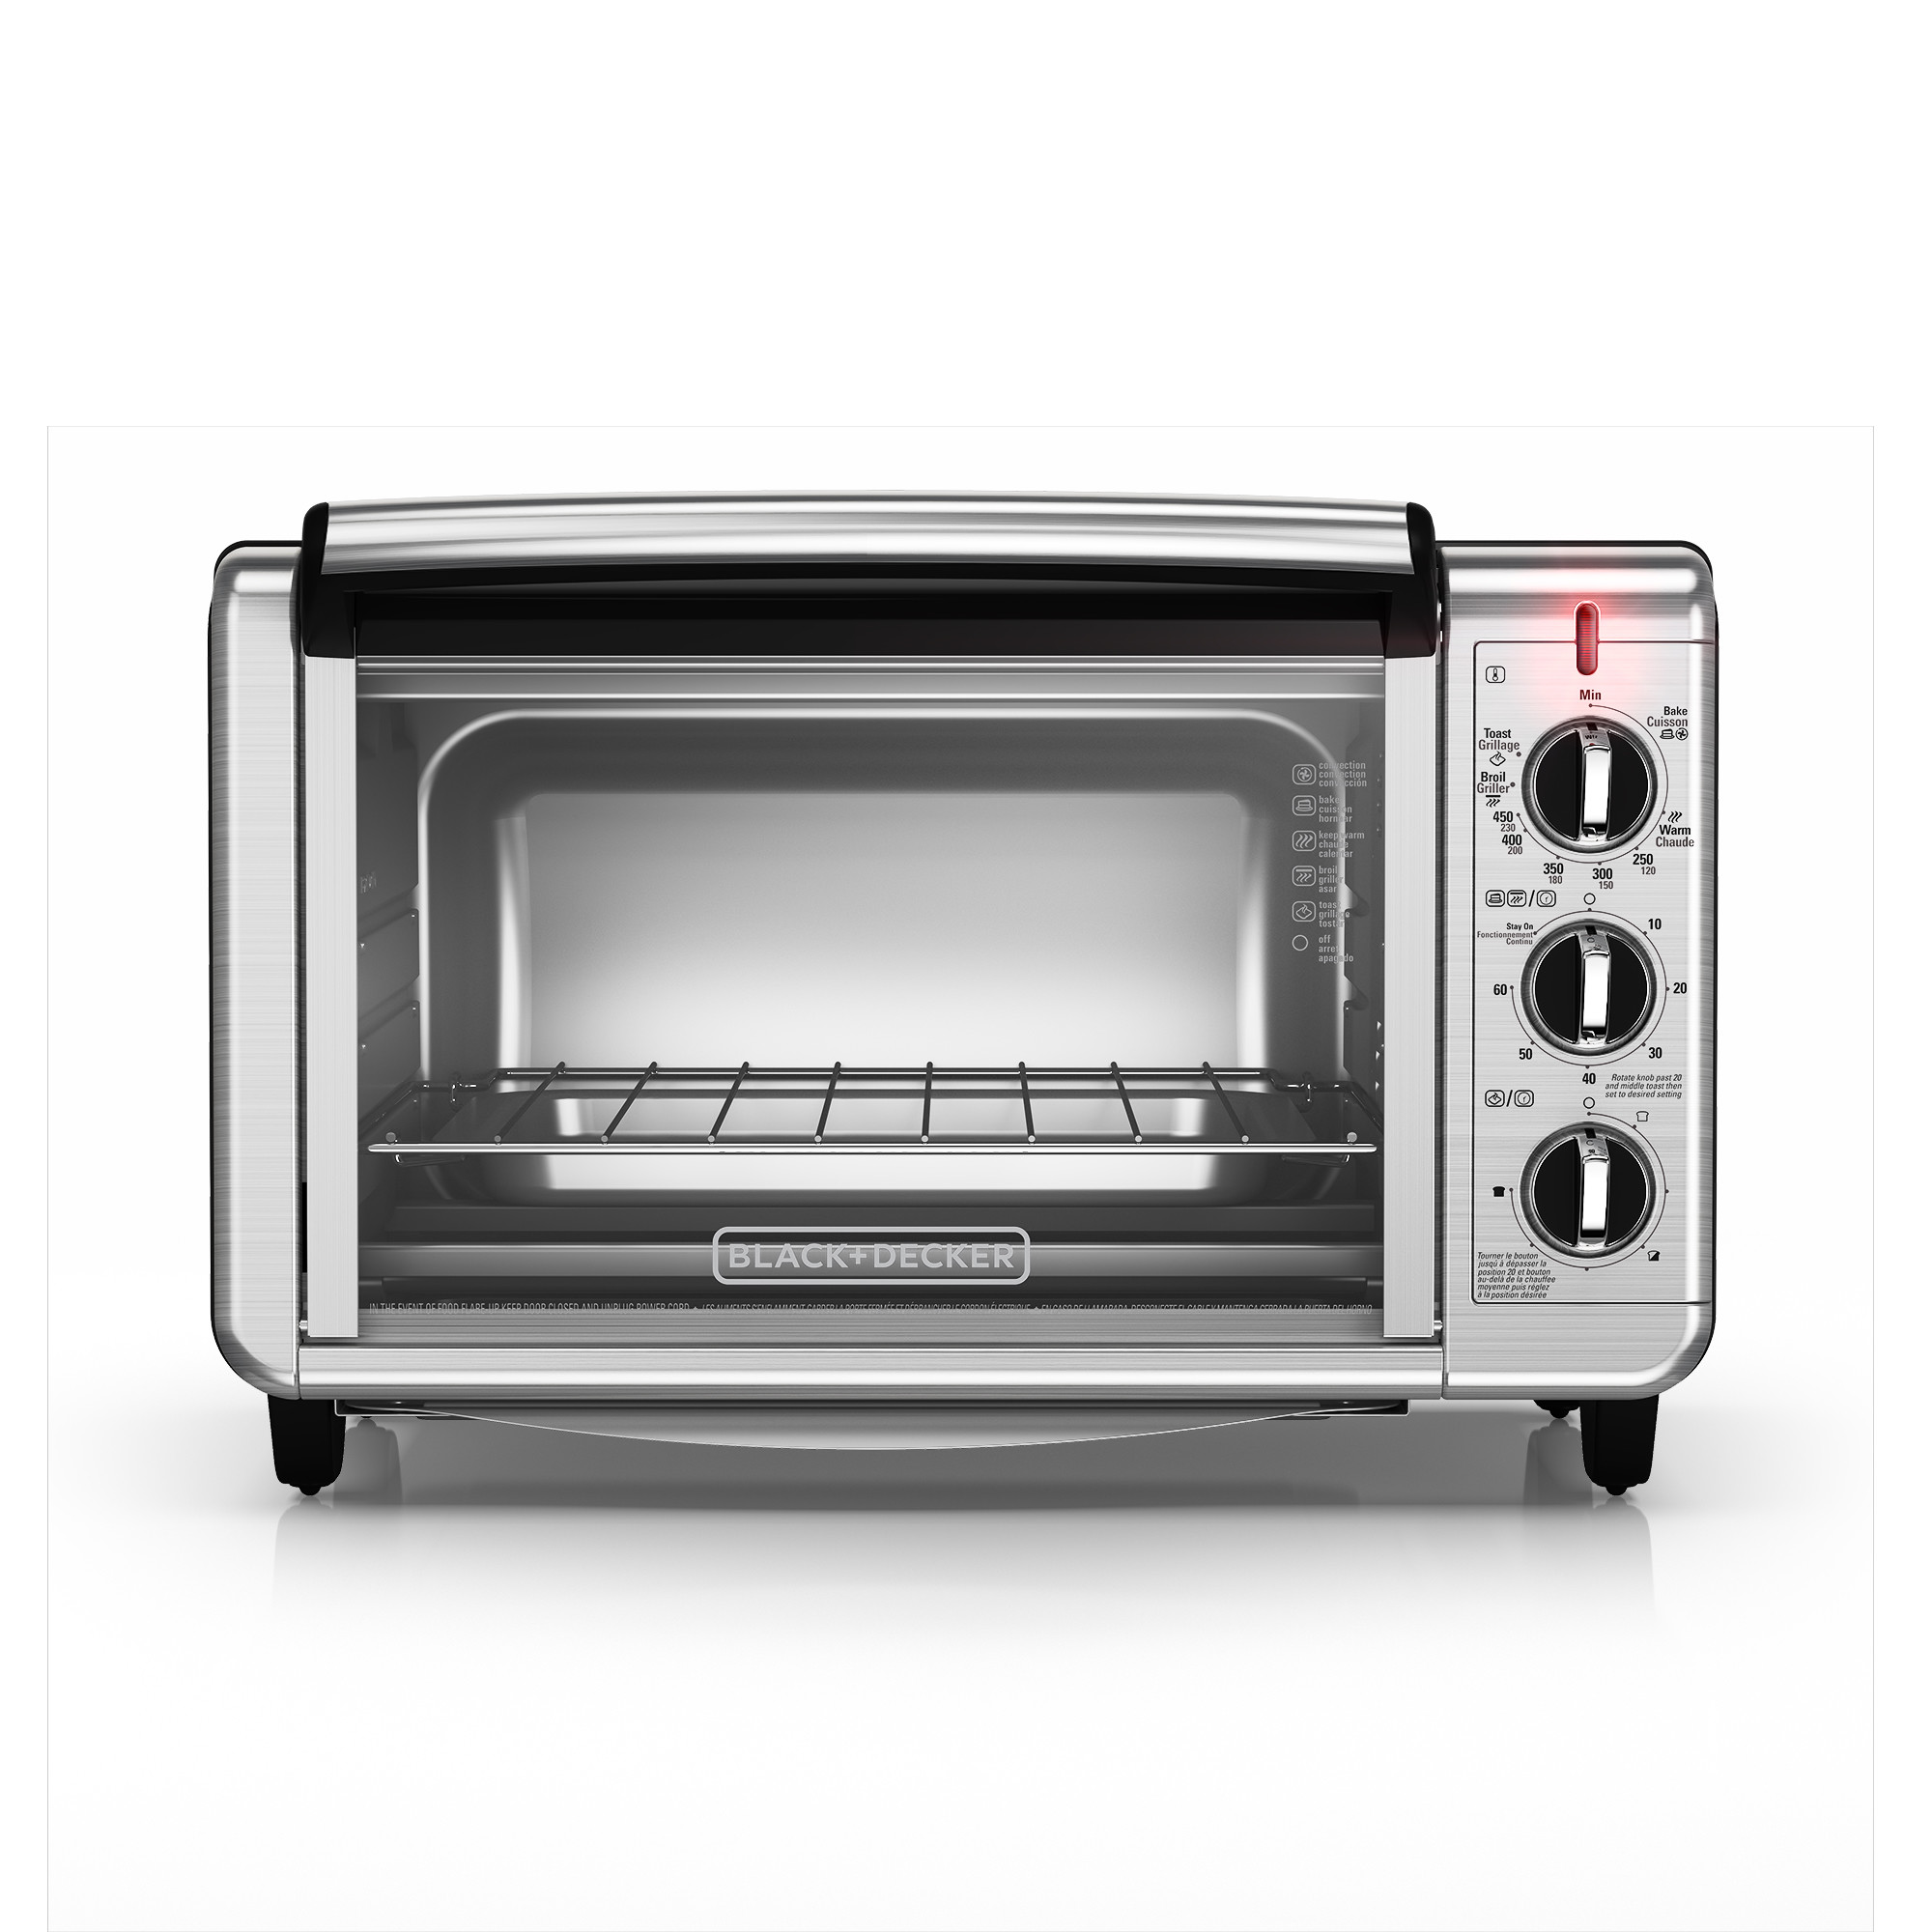 Black + Decker 6 Slice Toaster Oven $49.99